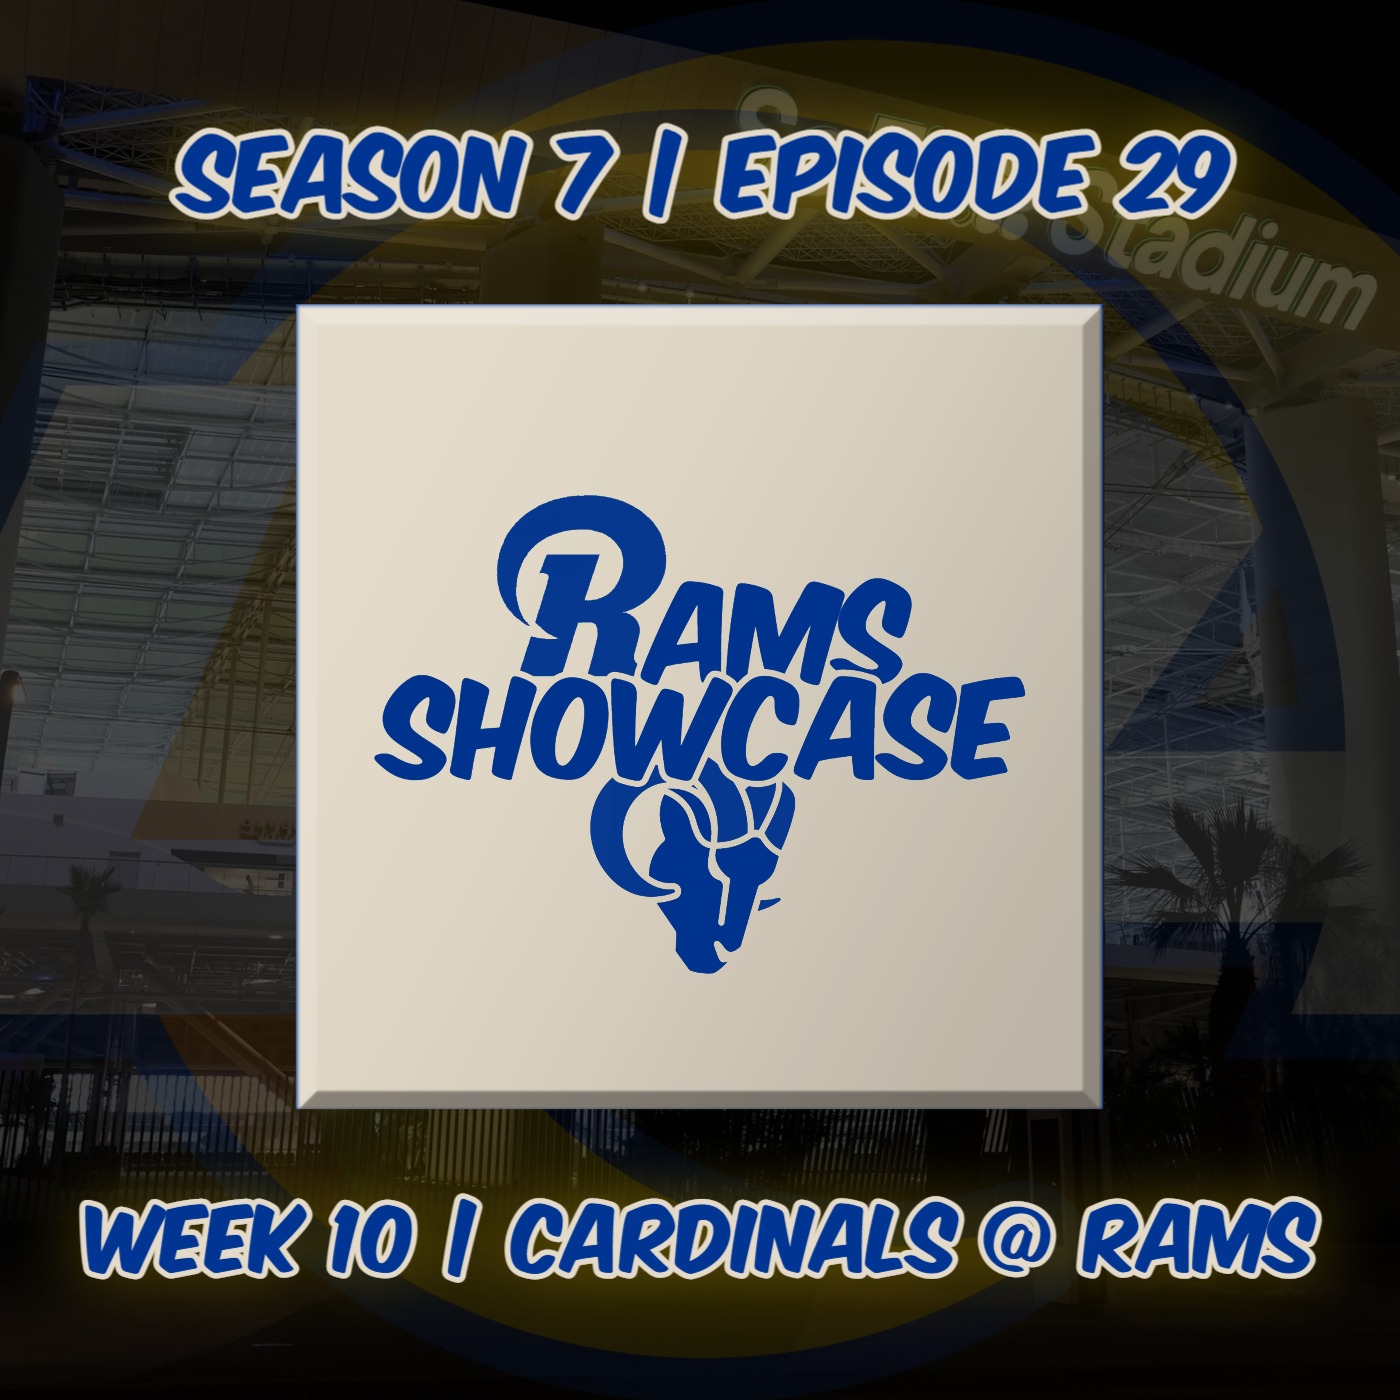 Rams Showcase | Week 10 - Cardinals @ Rams | FULL PODCAST